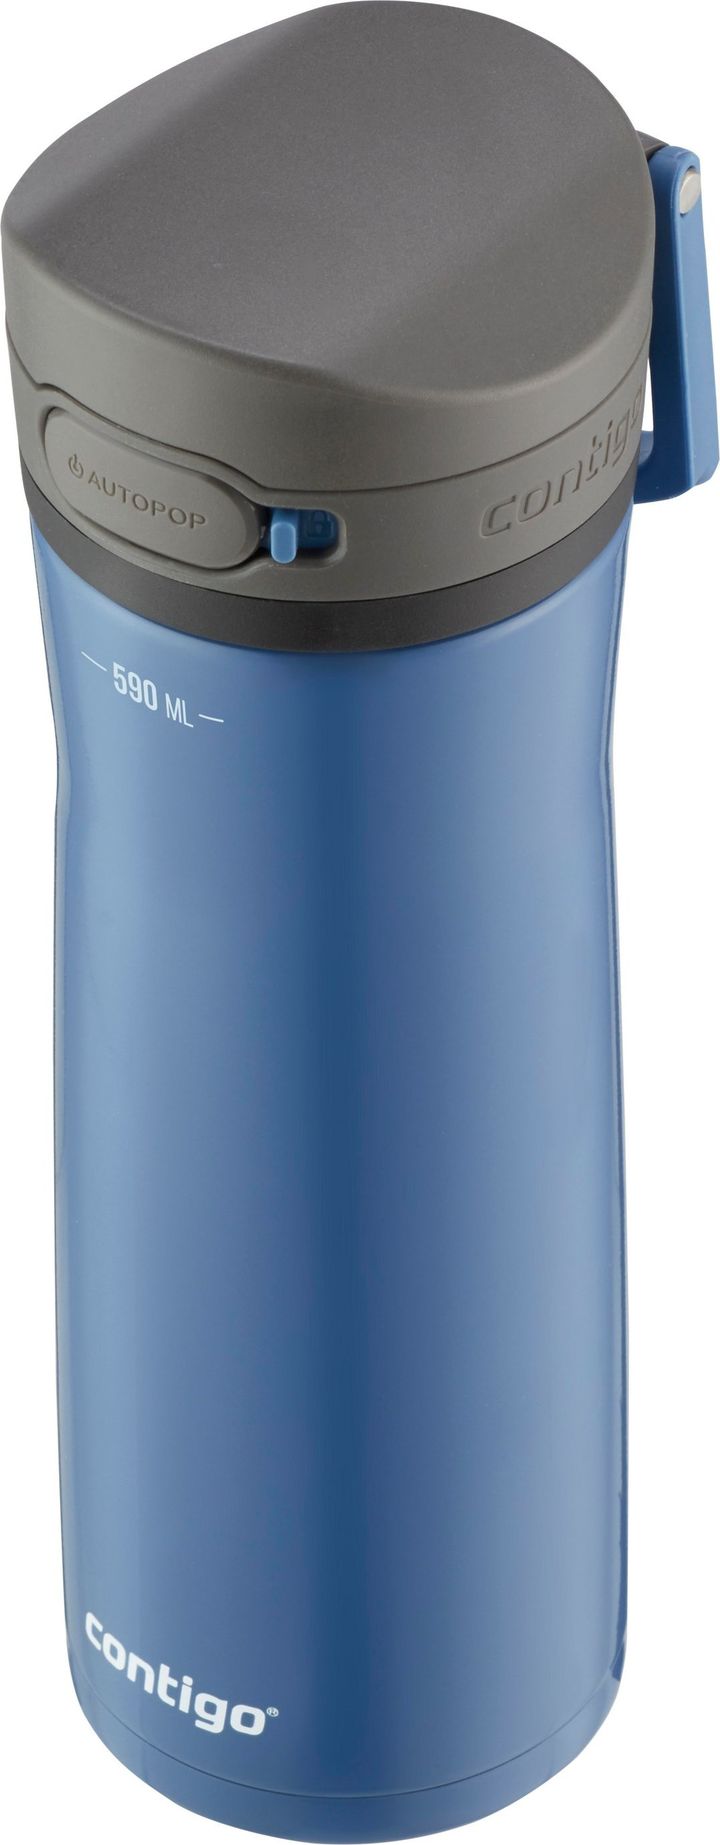 Jackson Chill Autopop Vacuum-Insulated Water Bottle 590 ml Blue Corn Contigo